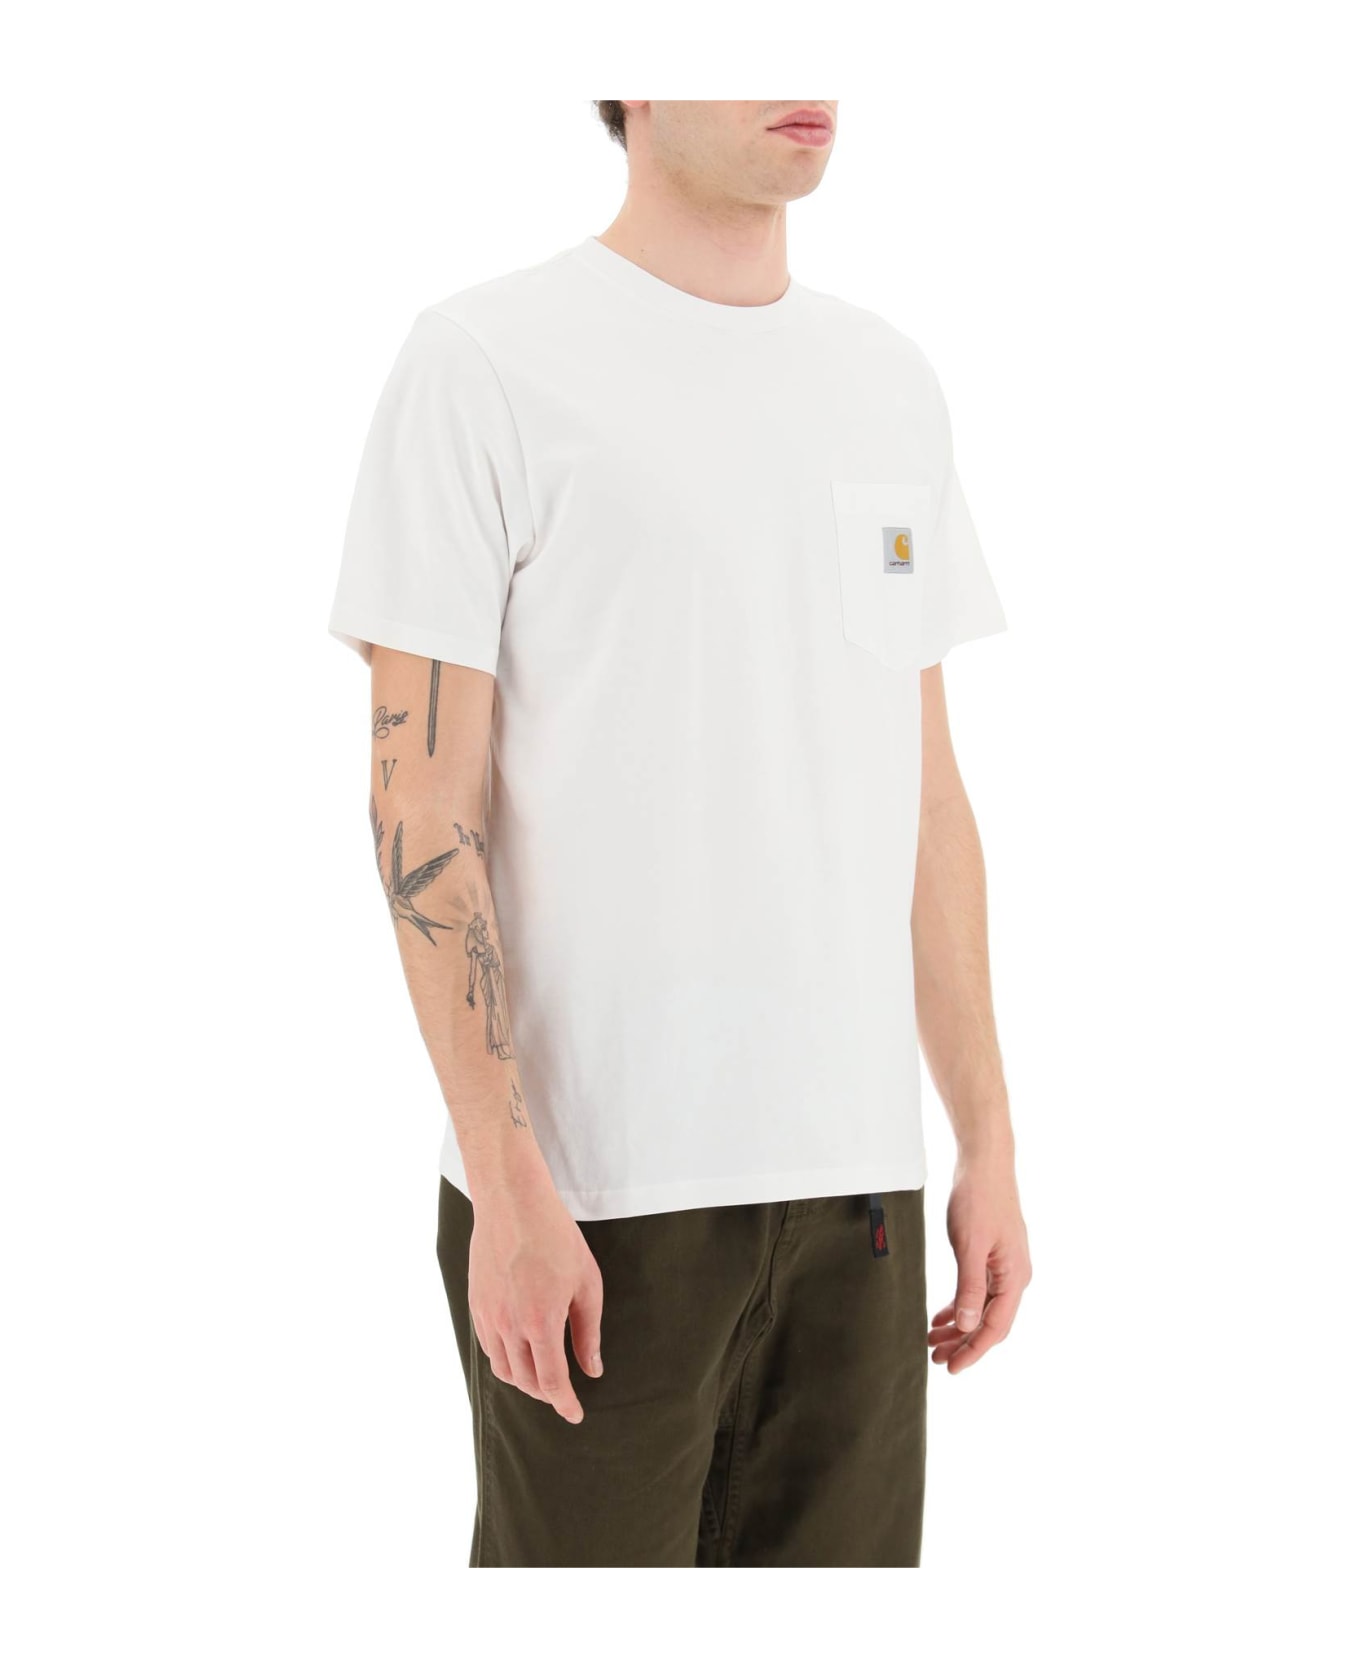 Carhartt 'pocket' T-shirt Featuring Logo Label - White